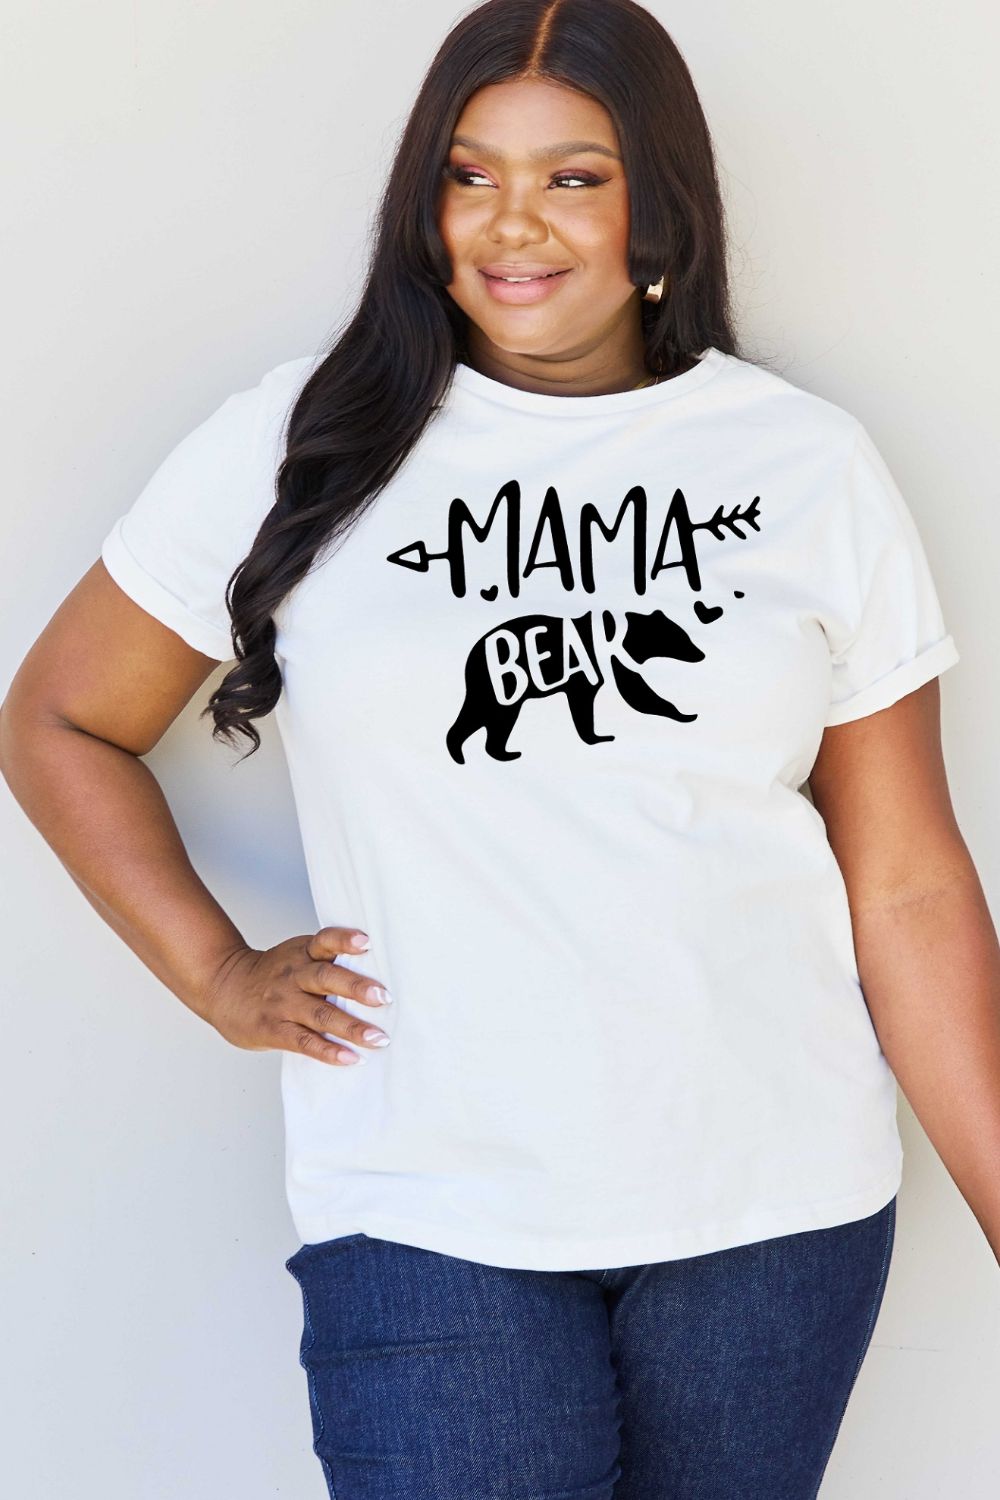 MAMA BEAR Graphic Cotton T-Shirt